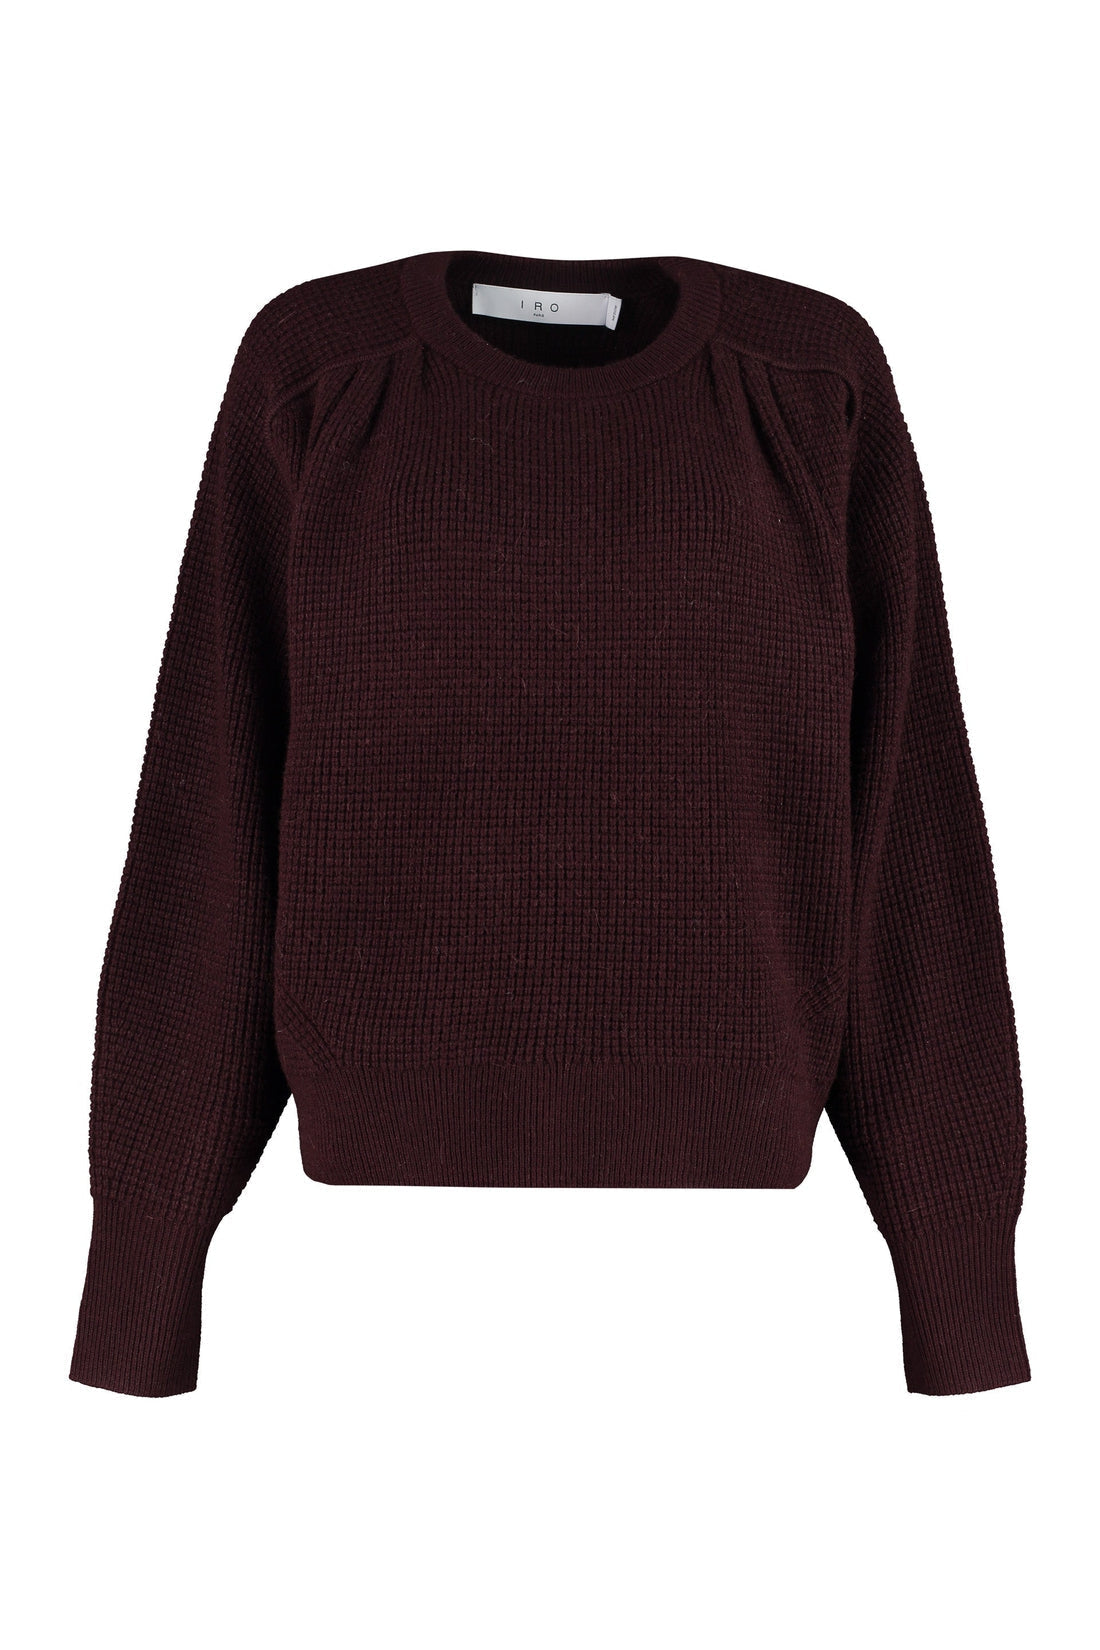 Iro-OUTLET-SALE-Wool-blend crew-neck sweater-ARCHIVIST